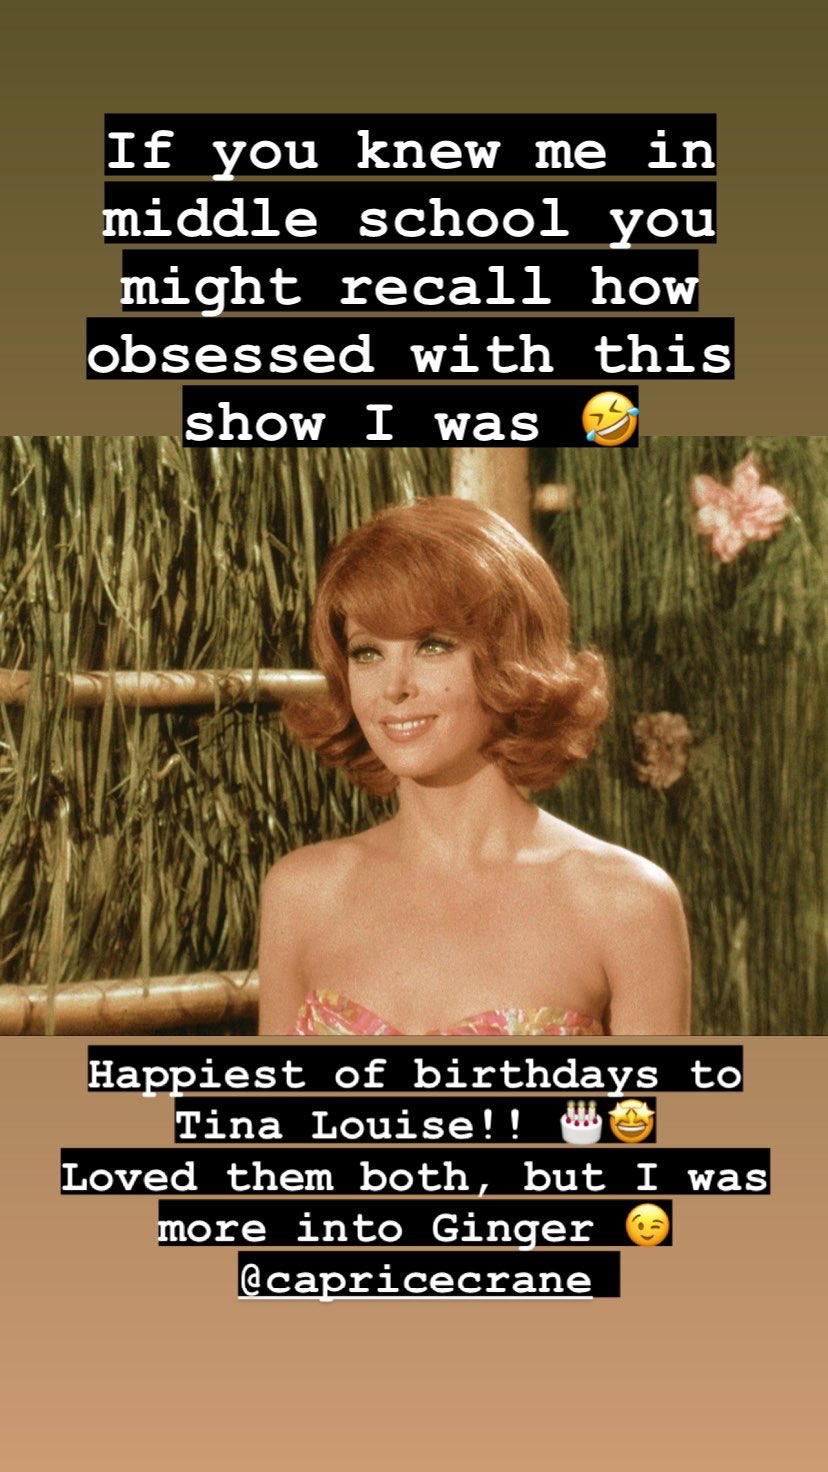 Happy birthday, Tina Louise!!! 